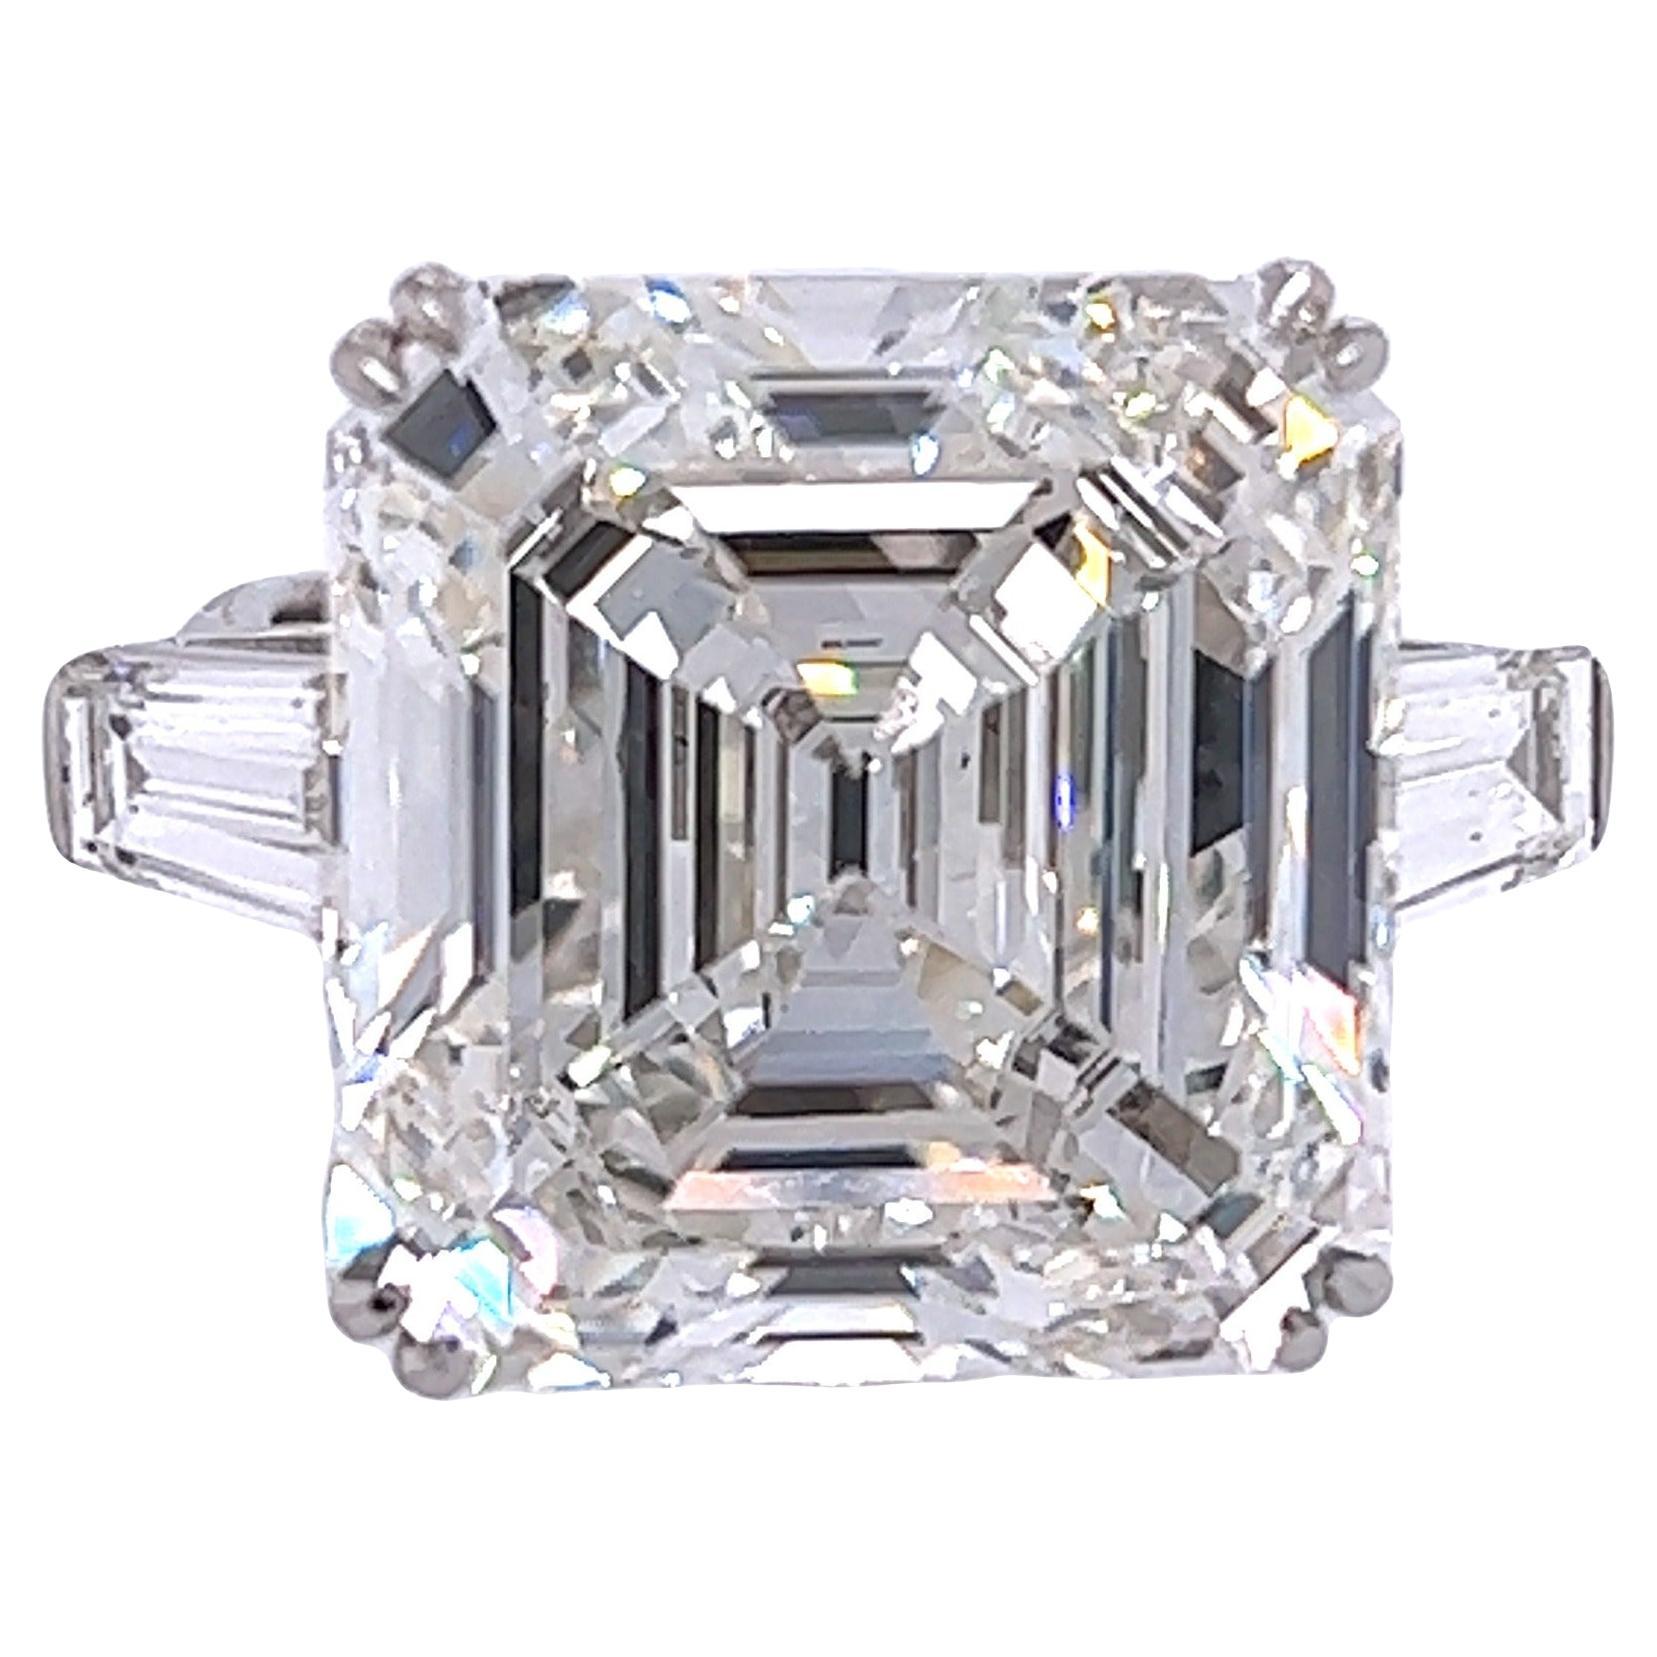 David Rosenberg 22.18 Carat Asscher Cut GIA Three Stone Diamond Engagement Ring